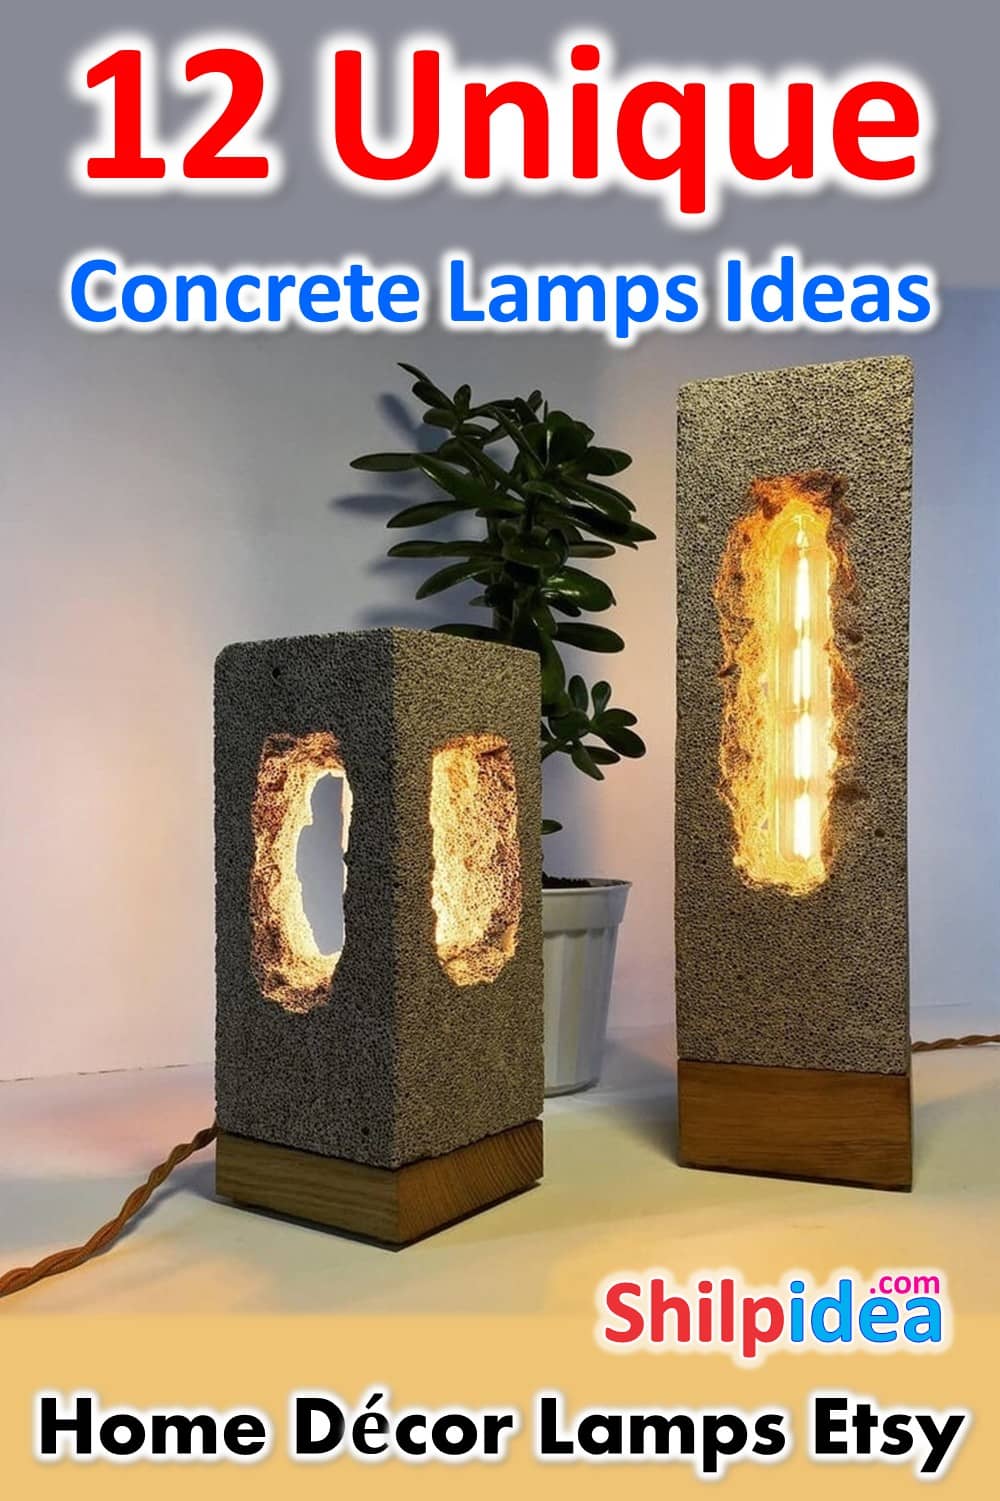 concrete-lamps-ideas-shilpidea-pin